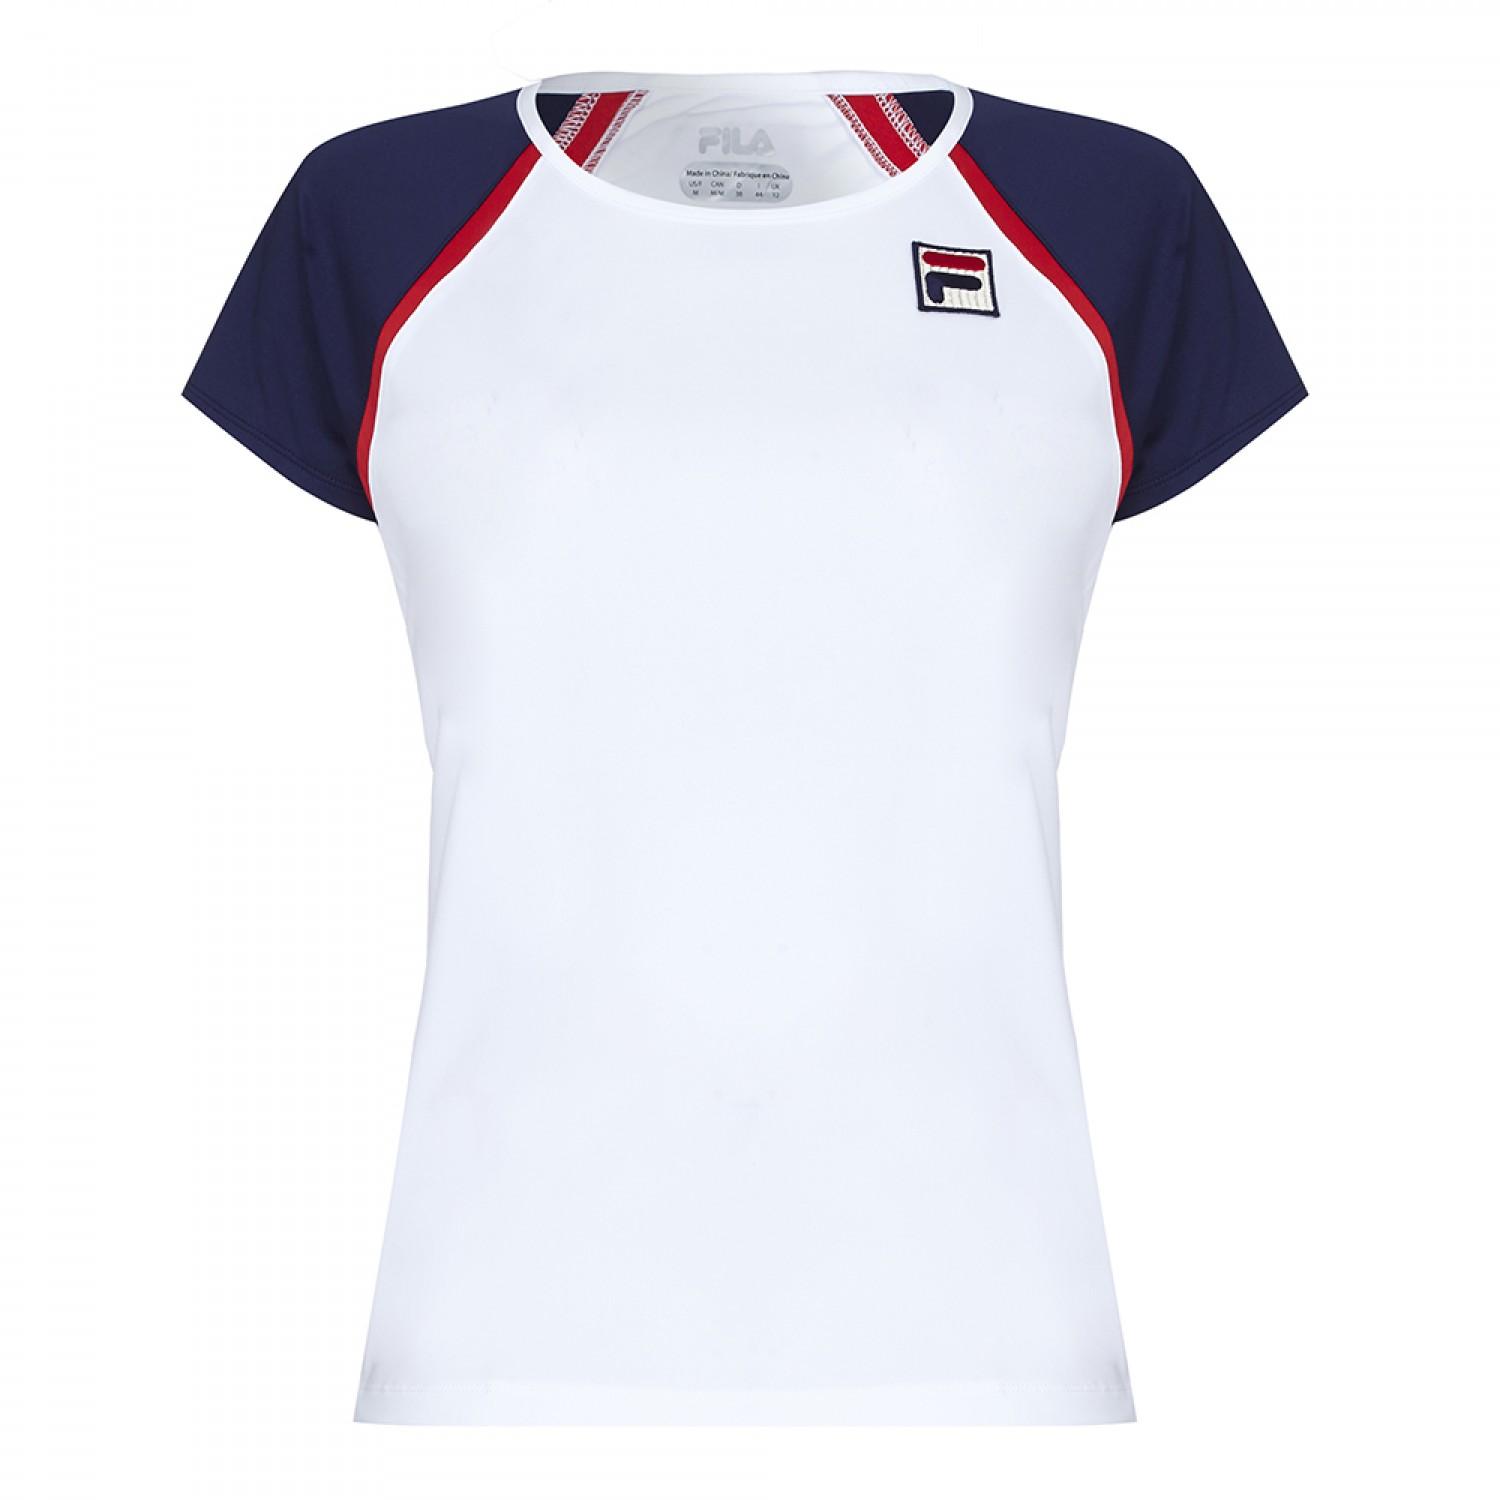 Fila Womens Heritage Short Sleeve Top - White/Navy/Red - Tennisnuts.com